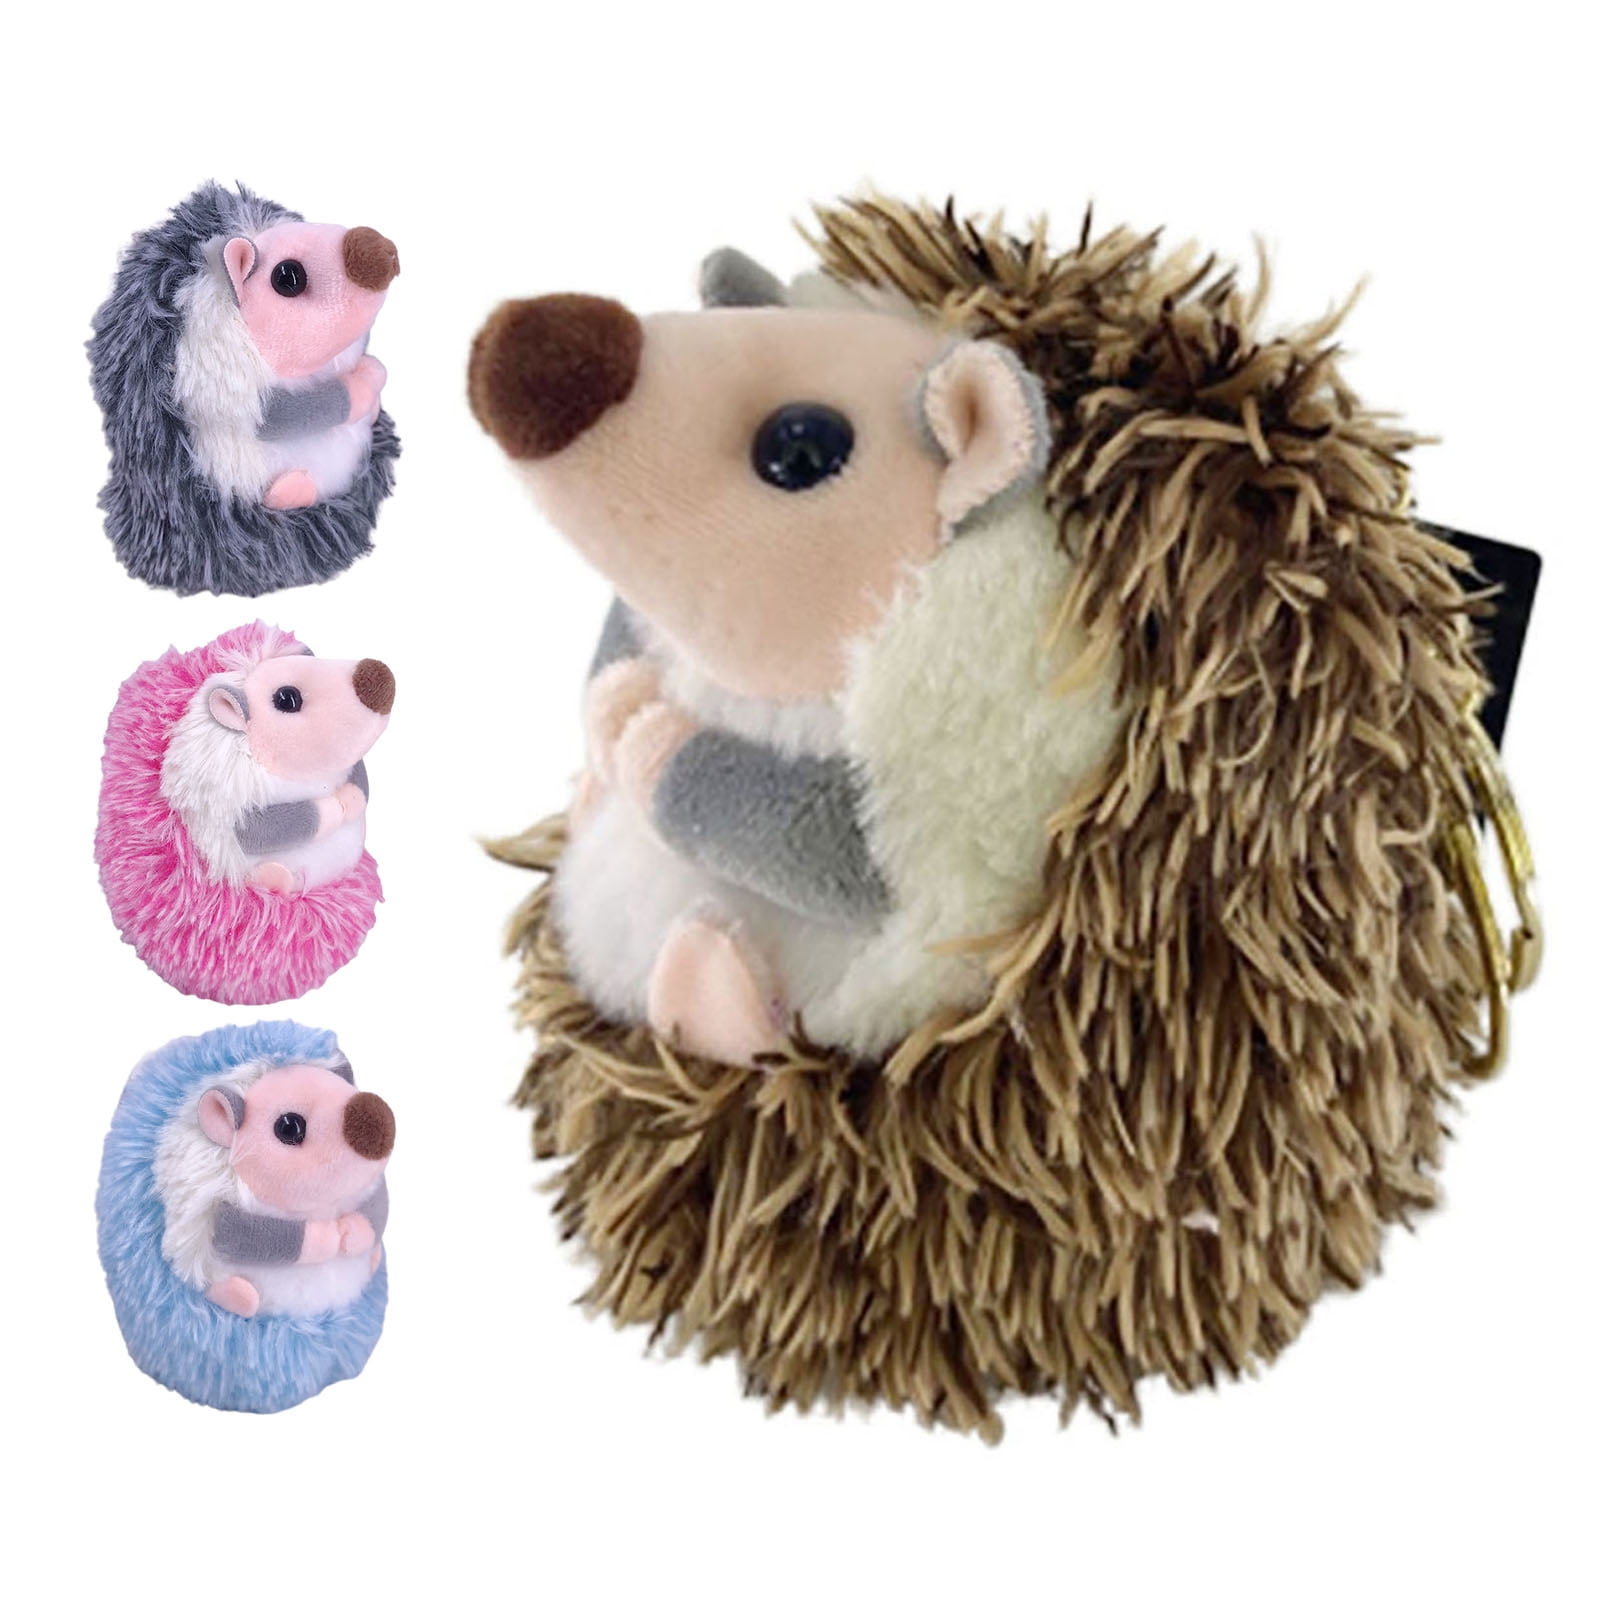 5 Inch Spicy Hedgehog Plush Stuffed Animal by Douglas for sale online 